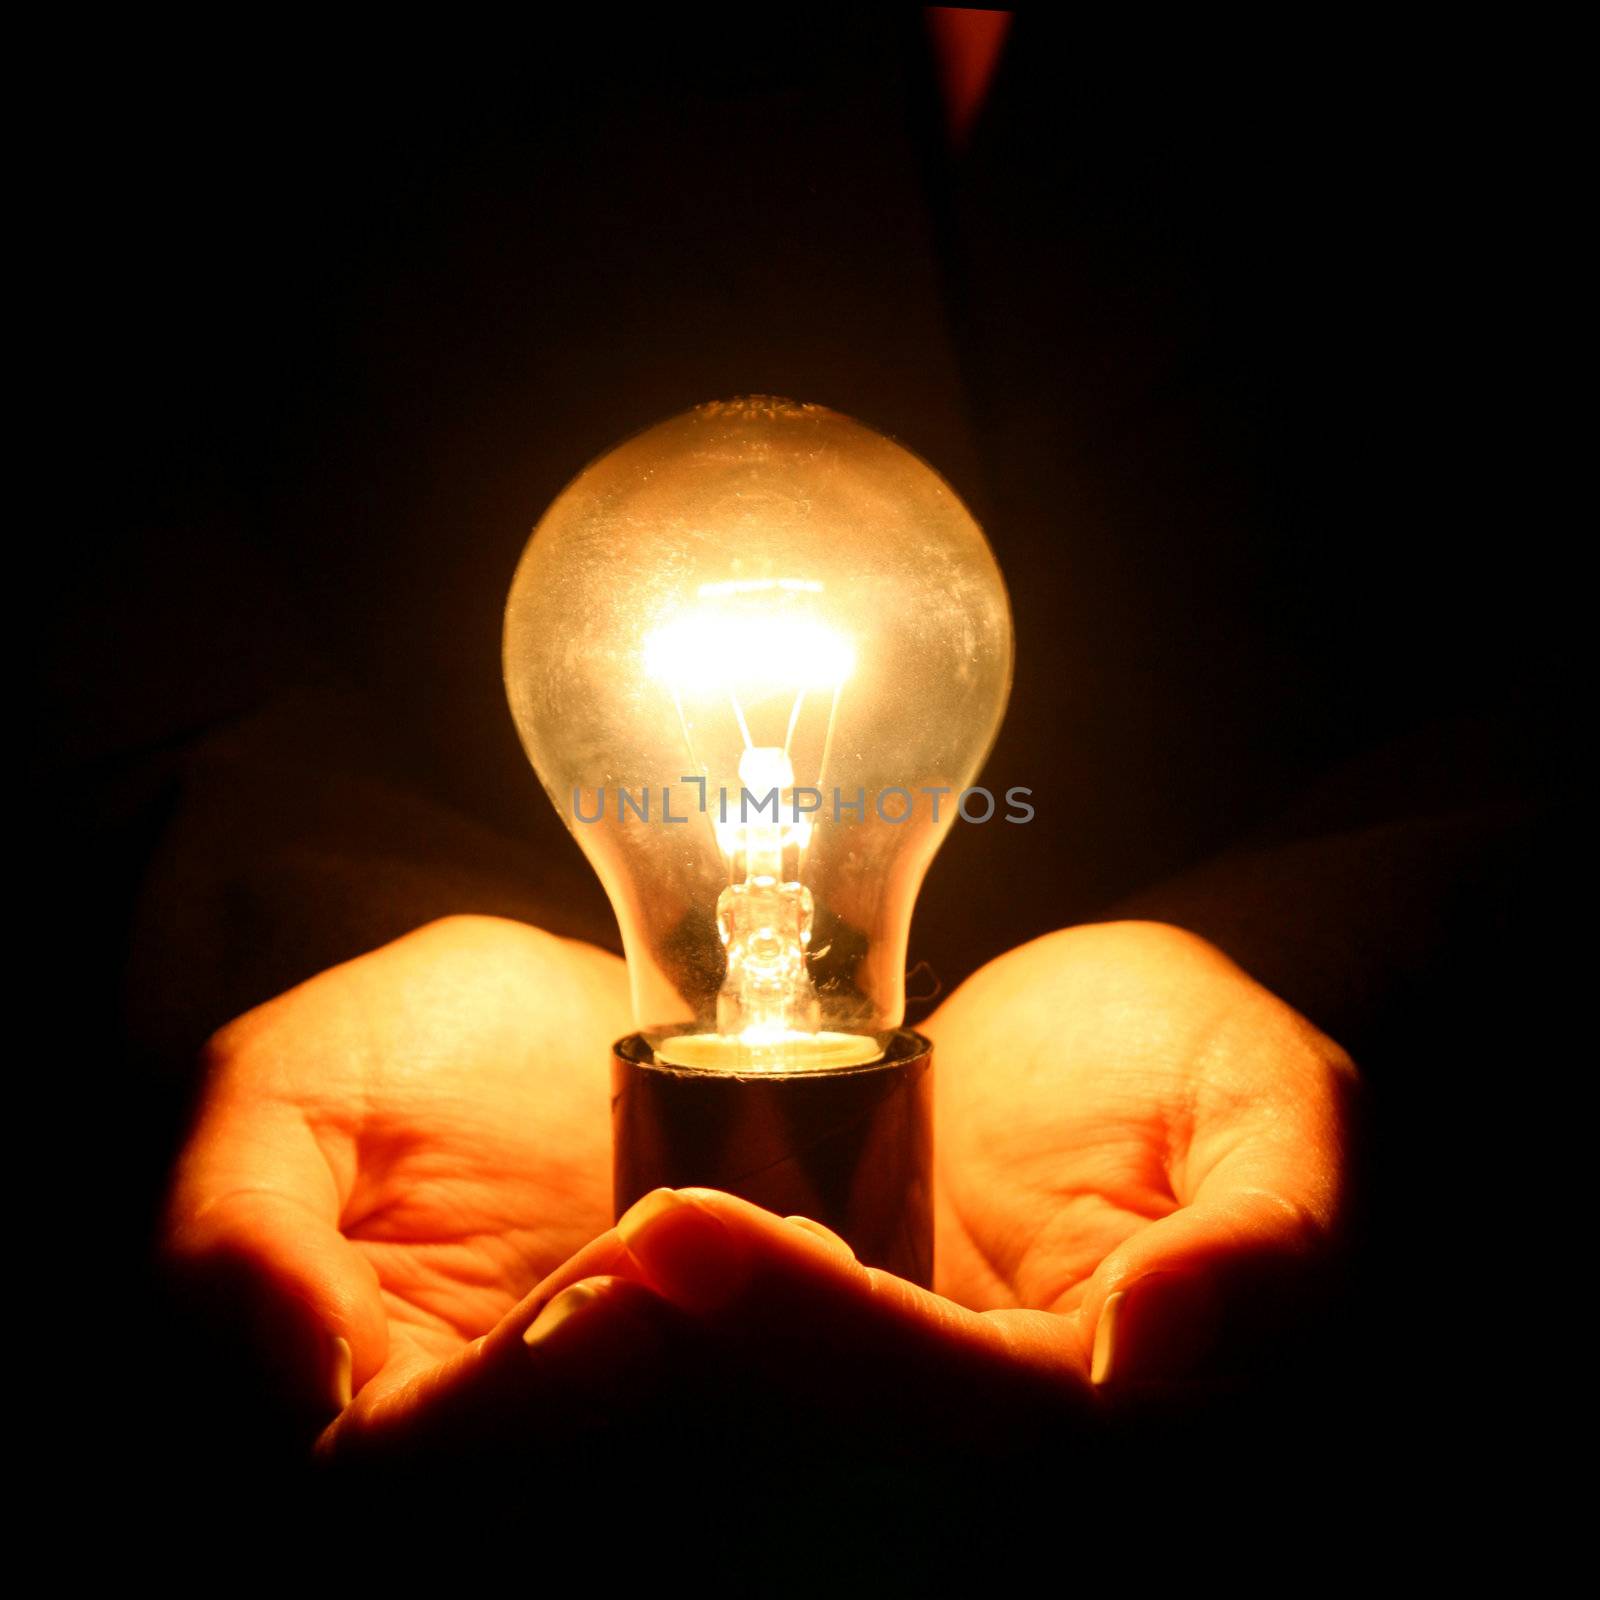 lamp in hand idea concept